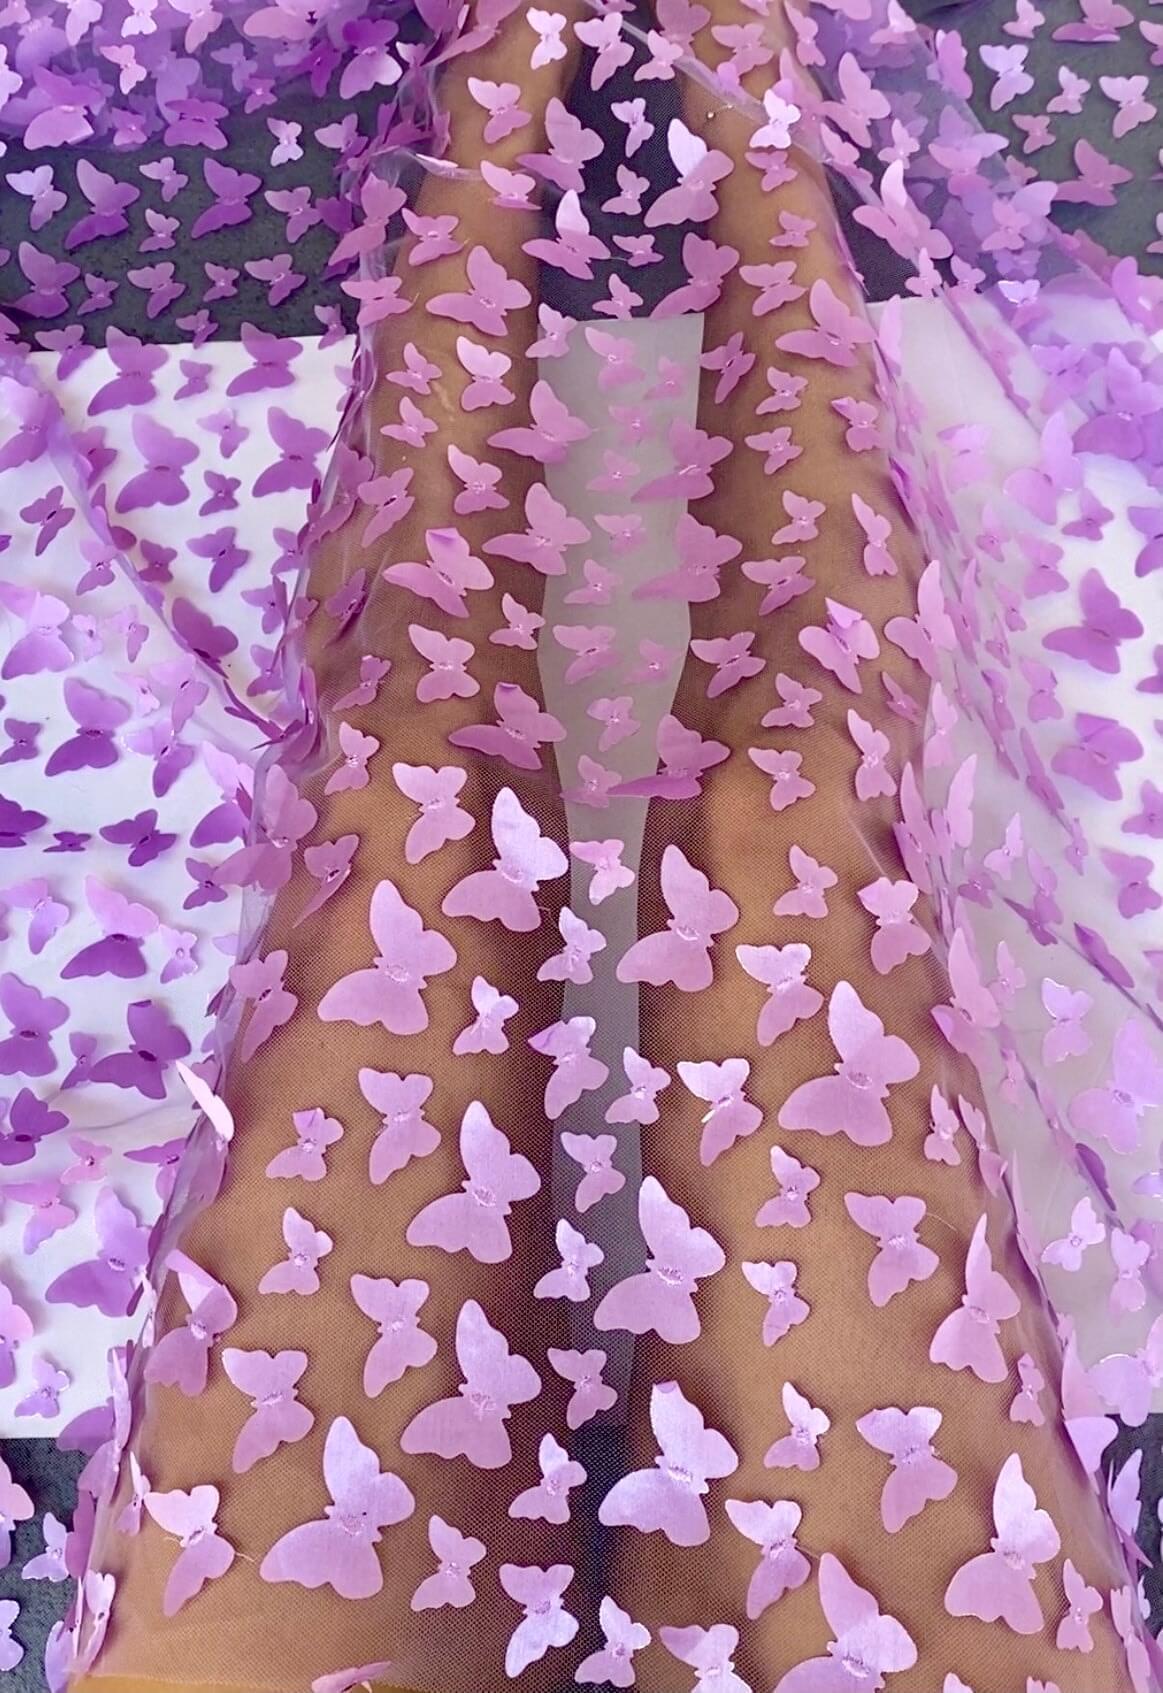 3D Lavender Butterfly Lace